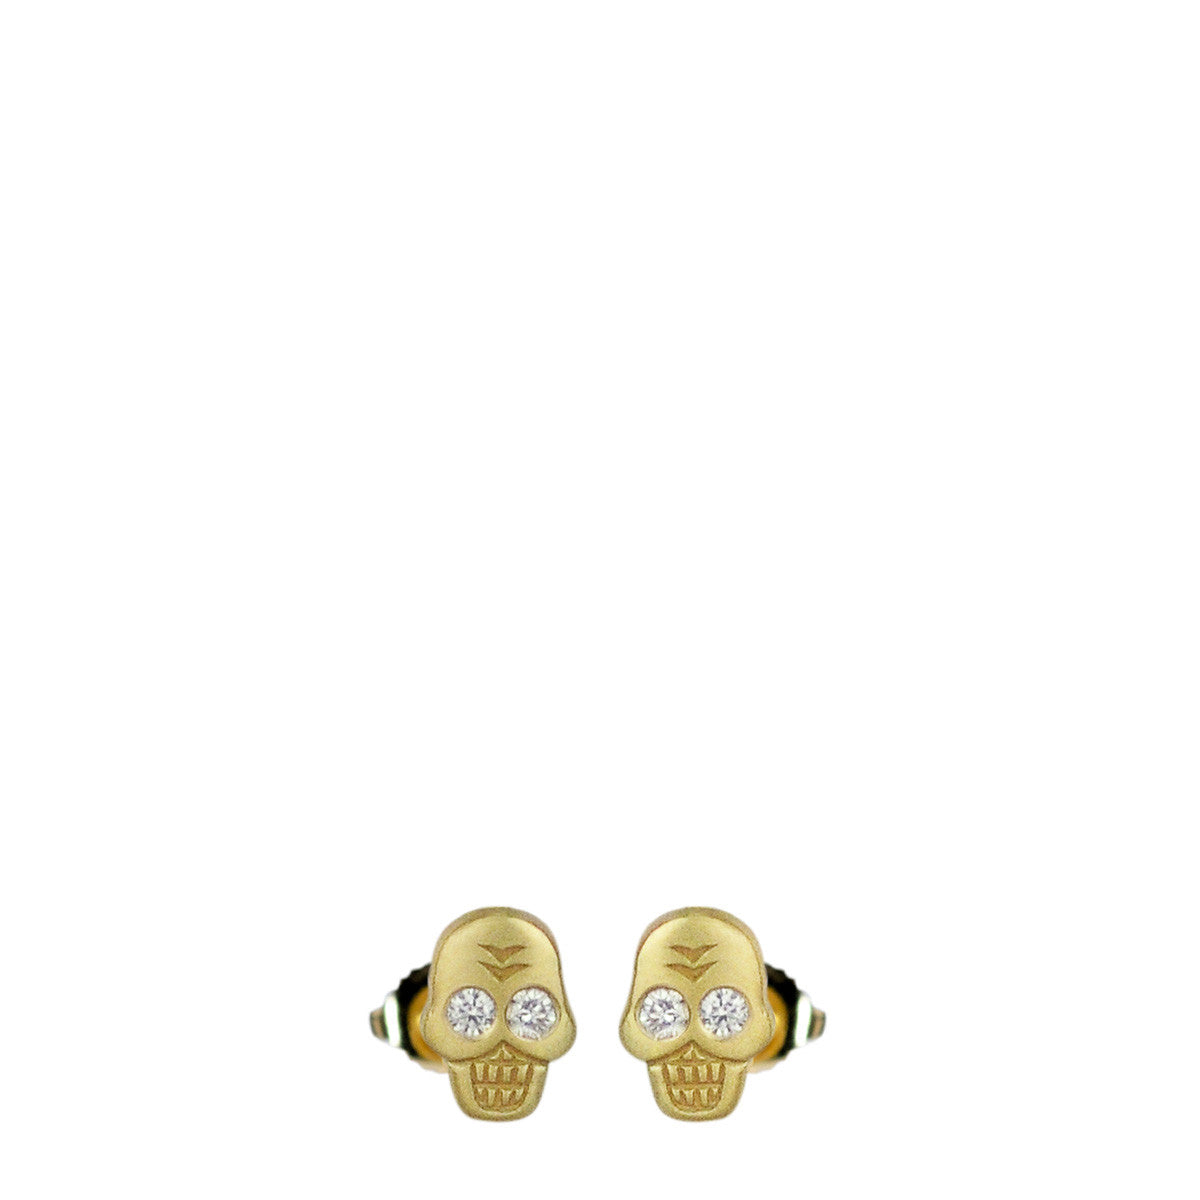 18K Gold Mini Skull Stud Earrings with Diamond Eyes